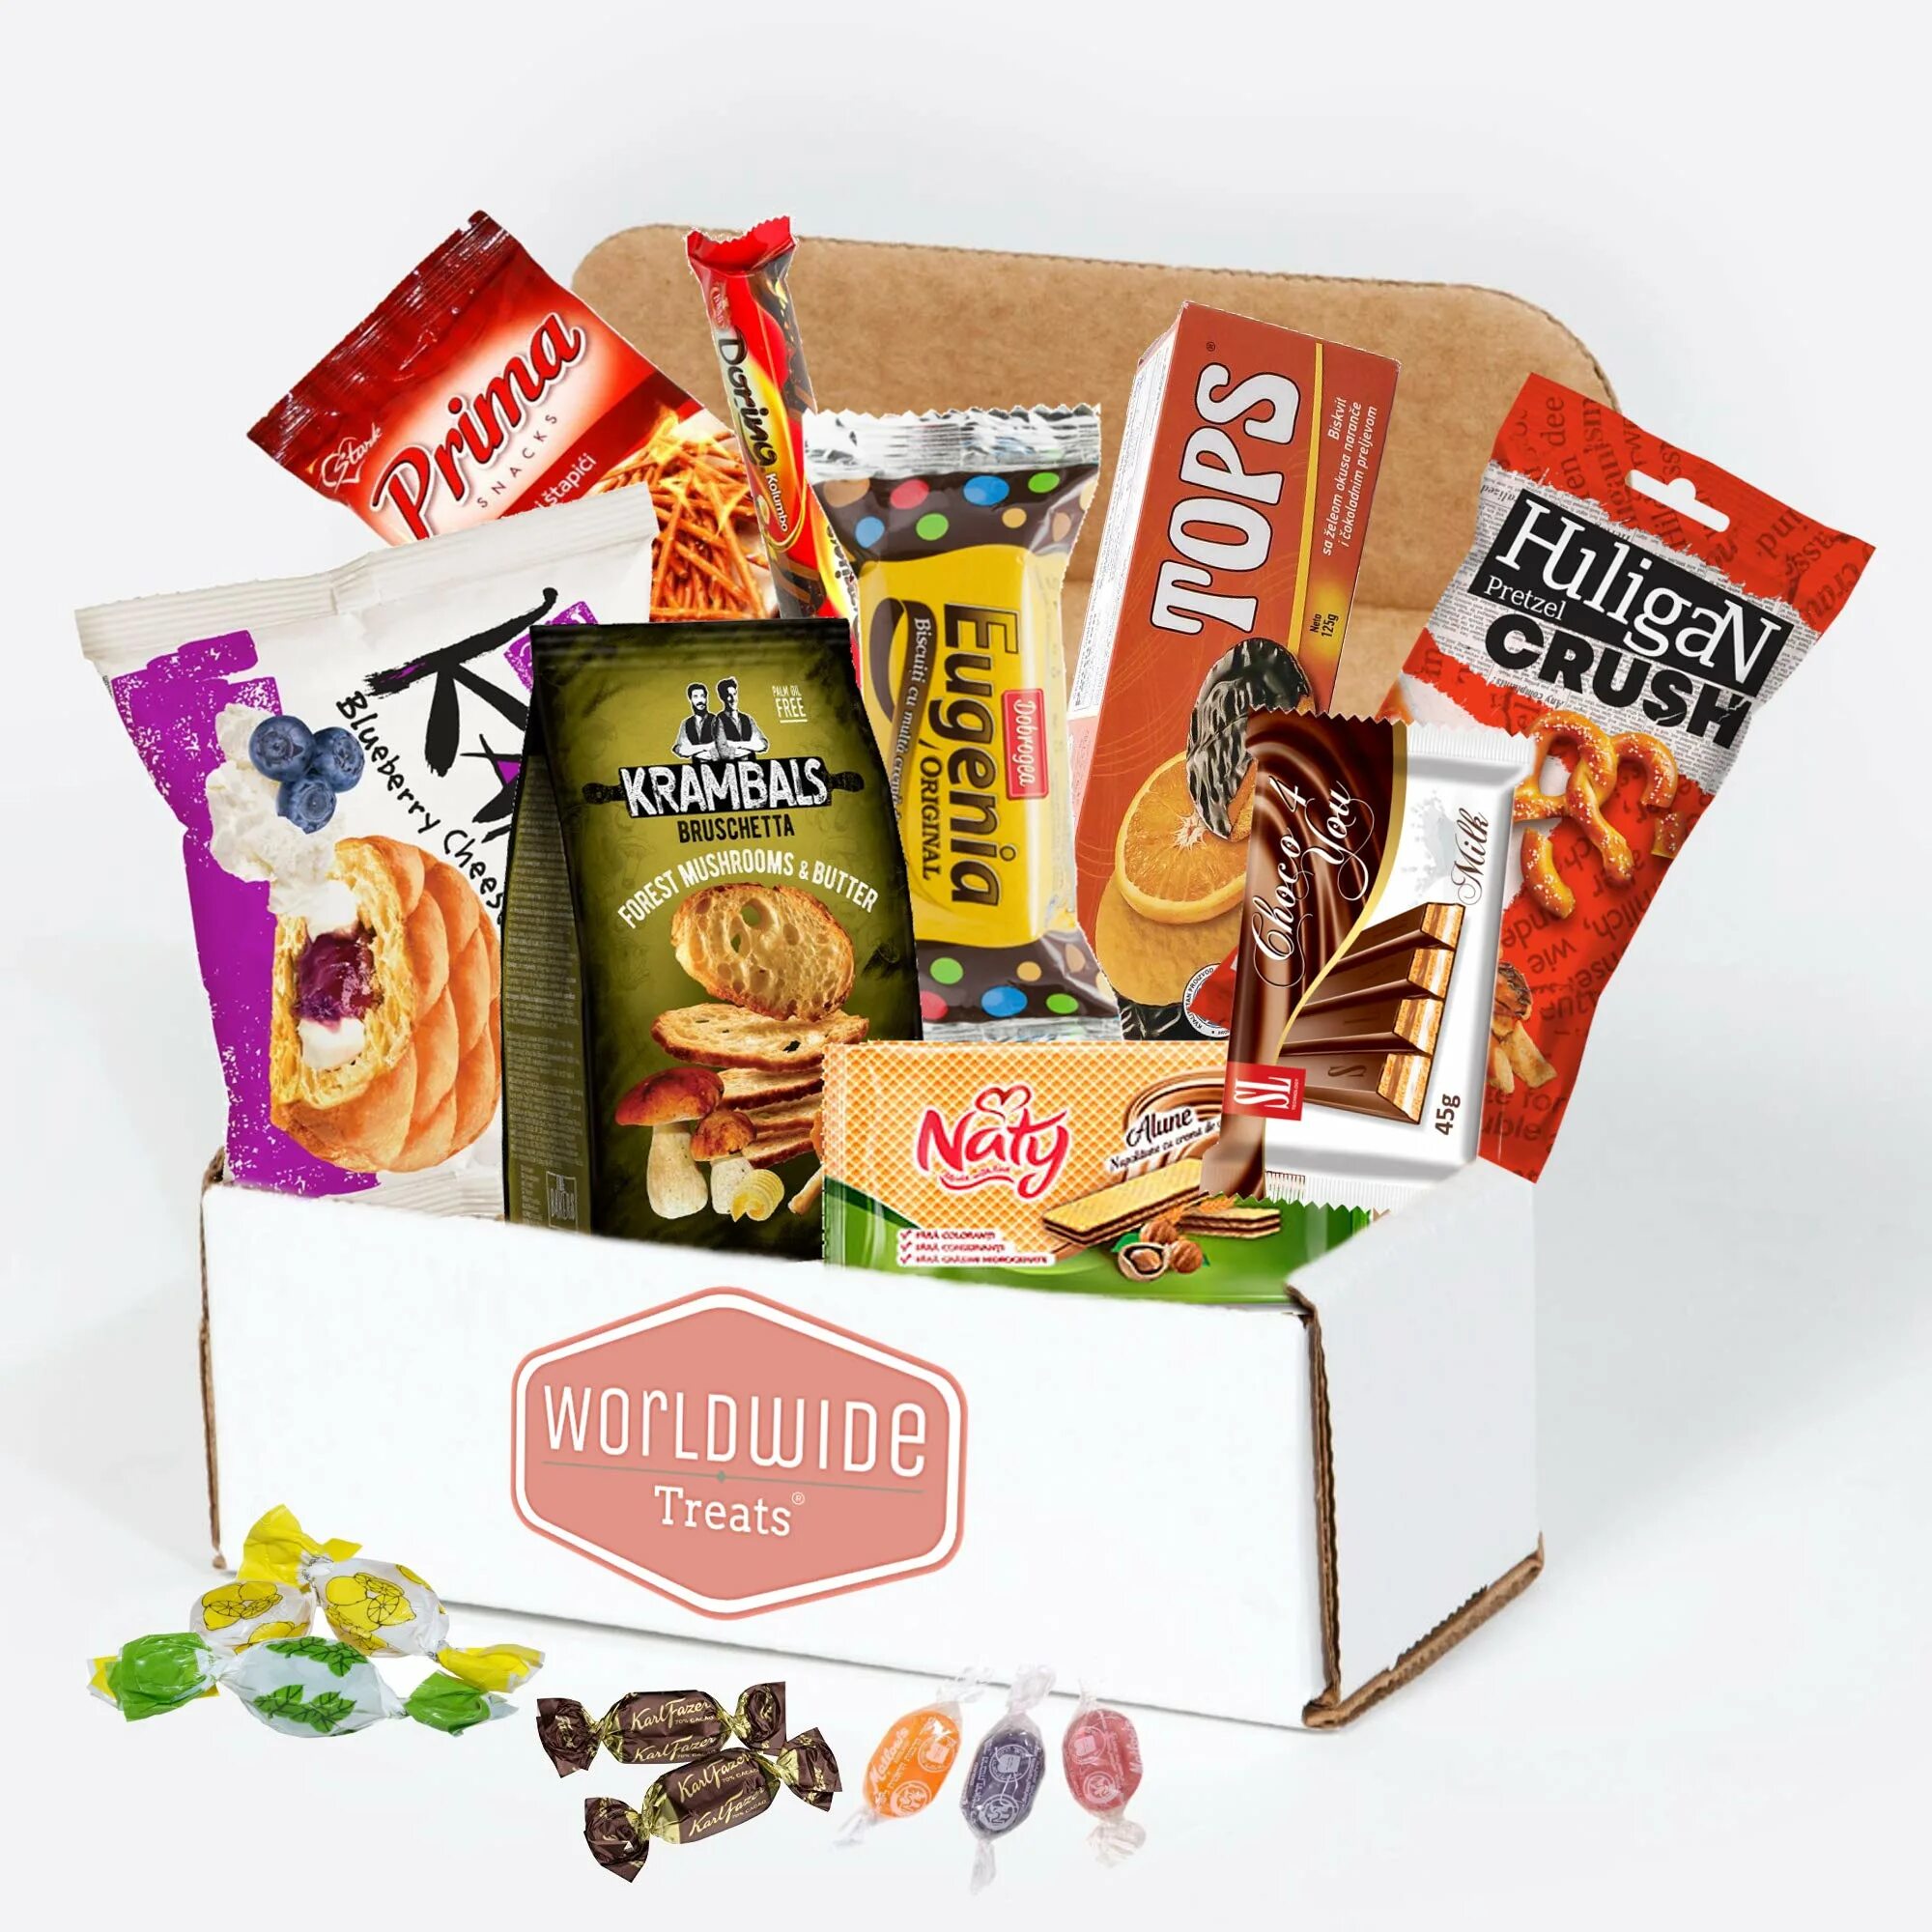 Kix Box Европейский. Premium snacks in Europe. Inter snack. Box Return. Country snack